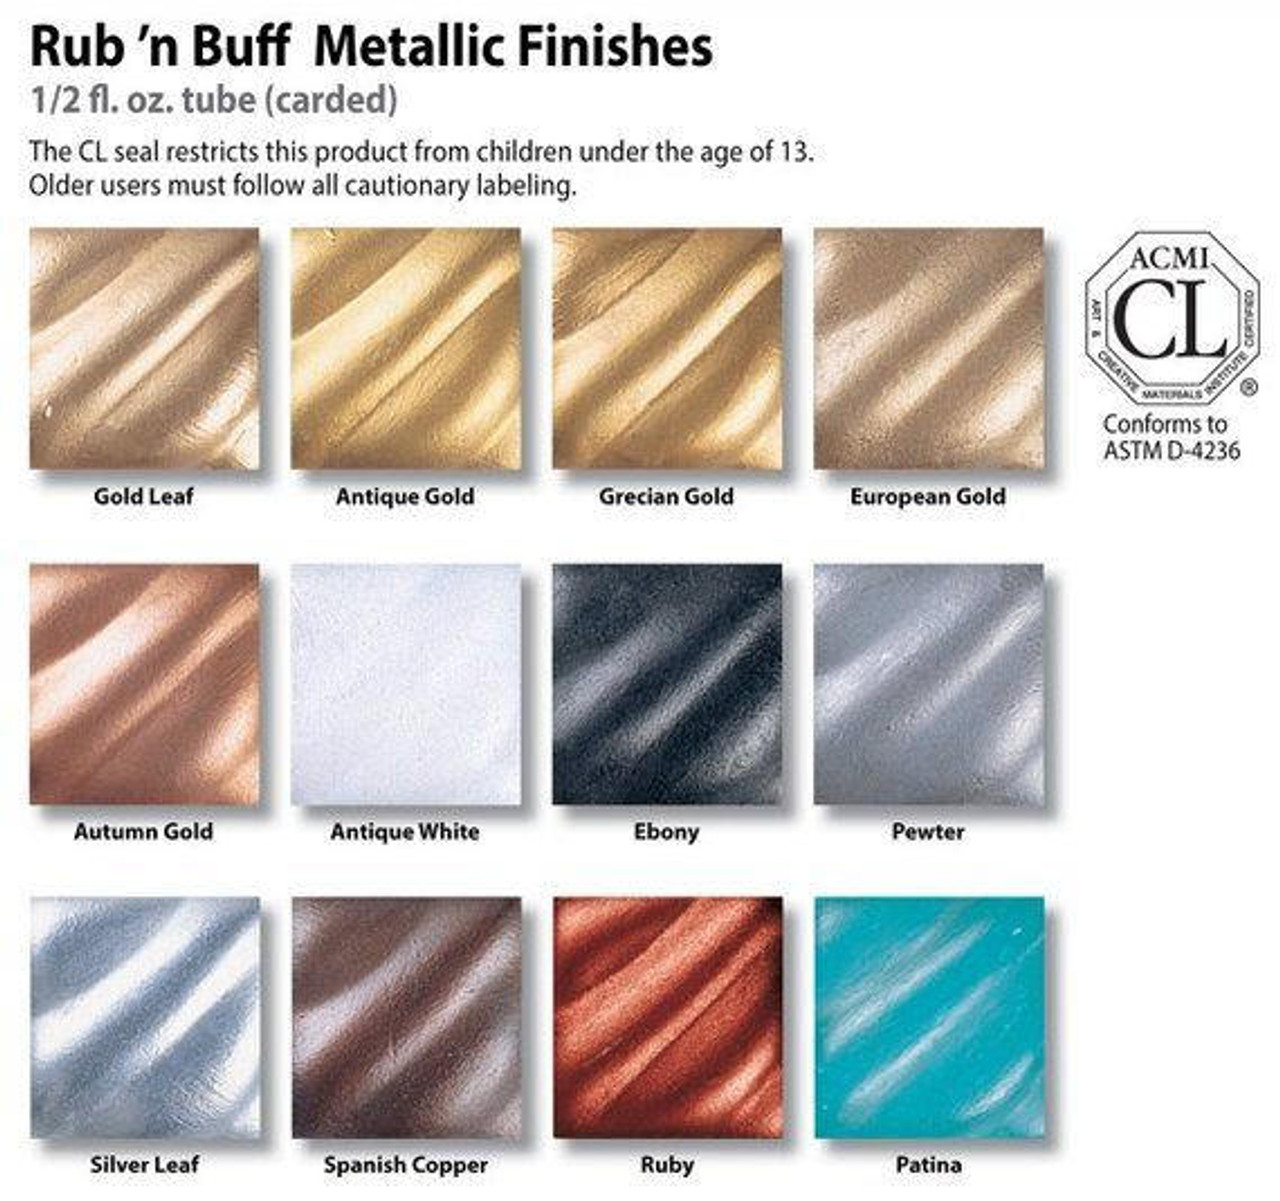 AMACO Rub n Buff Wax Metallic Finish 4 Color Kit - Antique Gold